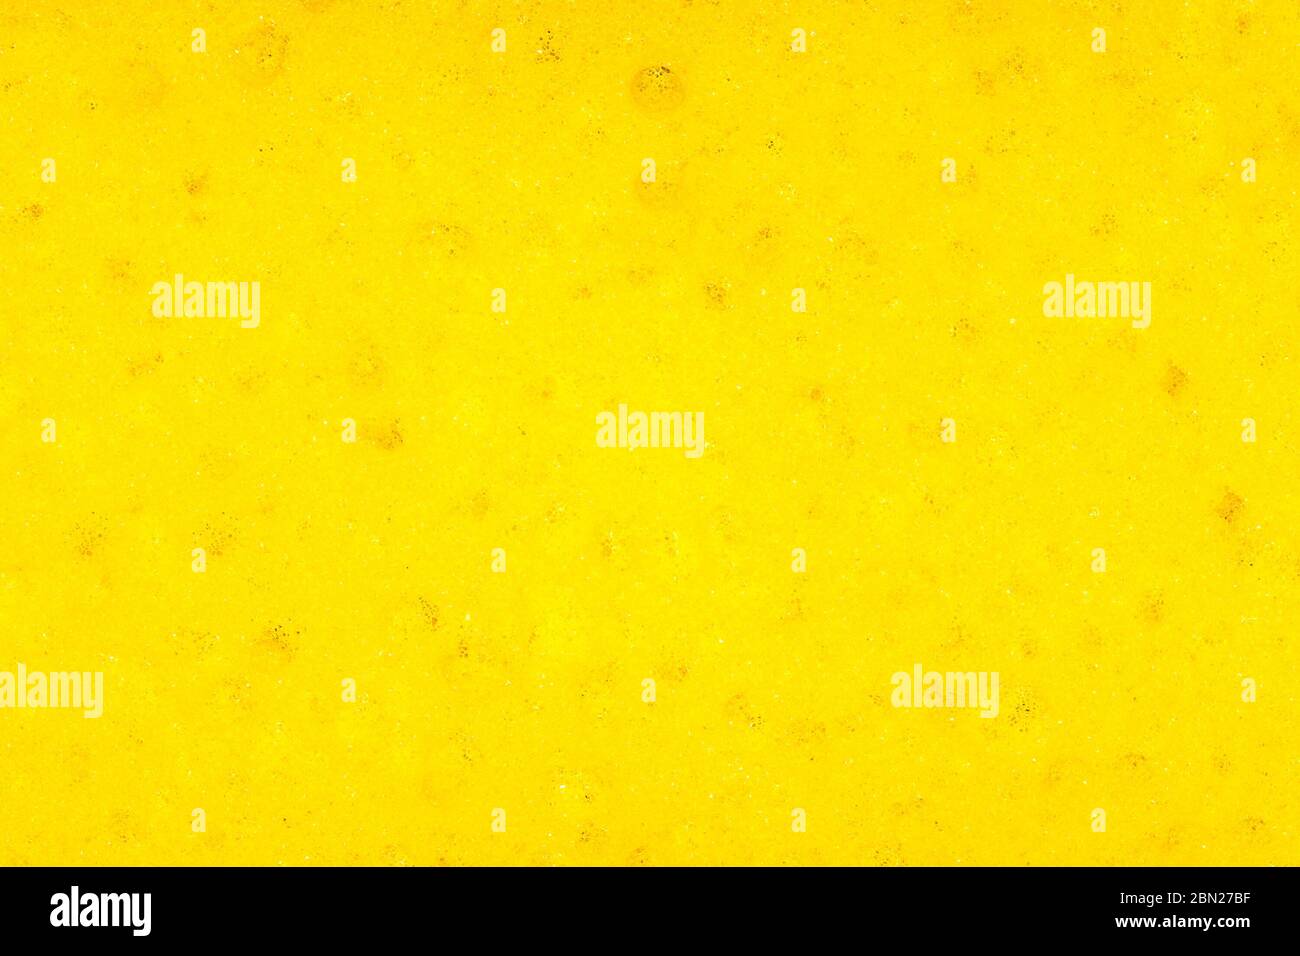 image background slice texture foam rubber yellow Stock Photo